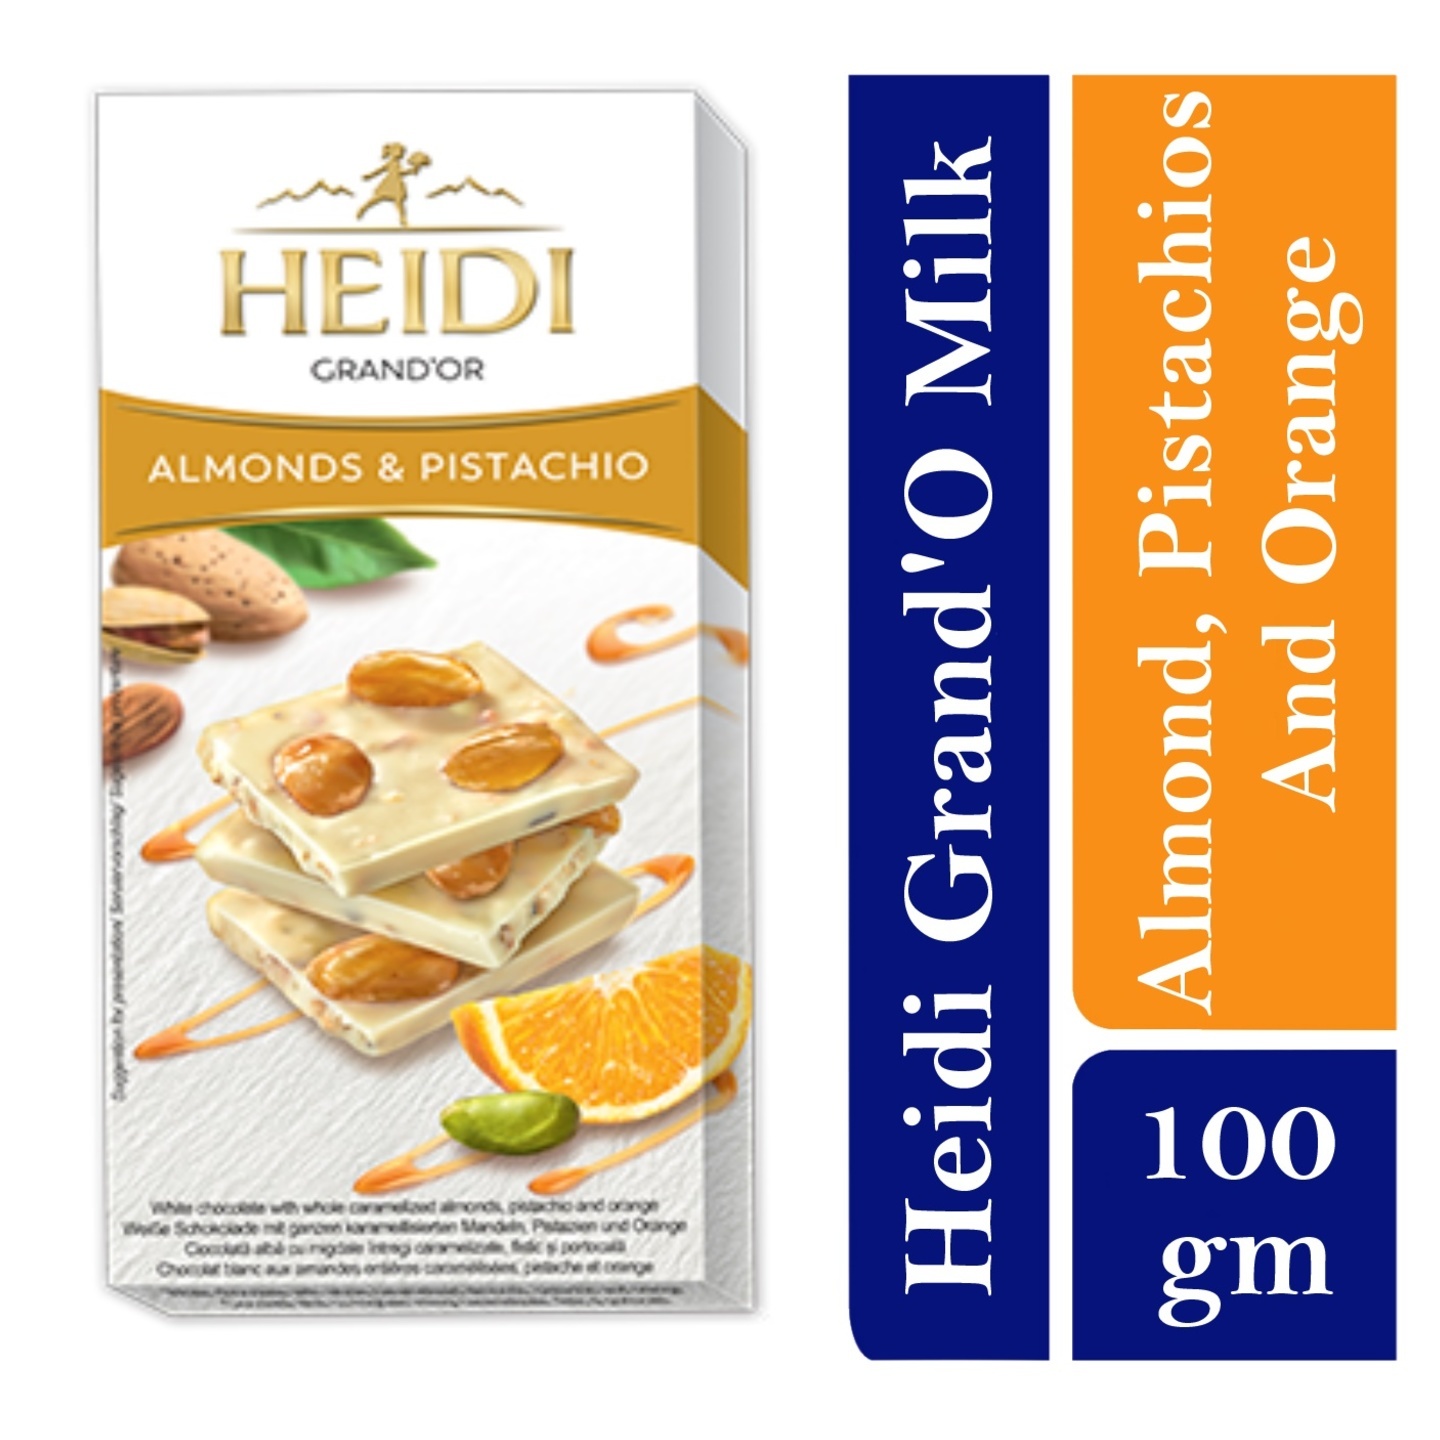 Heidi GrandOr white Chocolate with whole caramelized Almonds, Pistachios and Orange